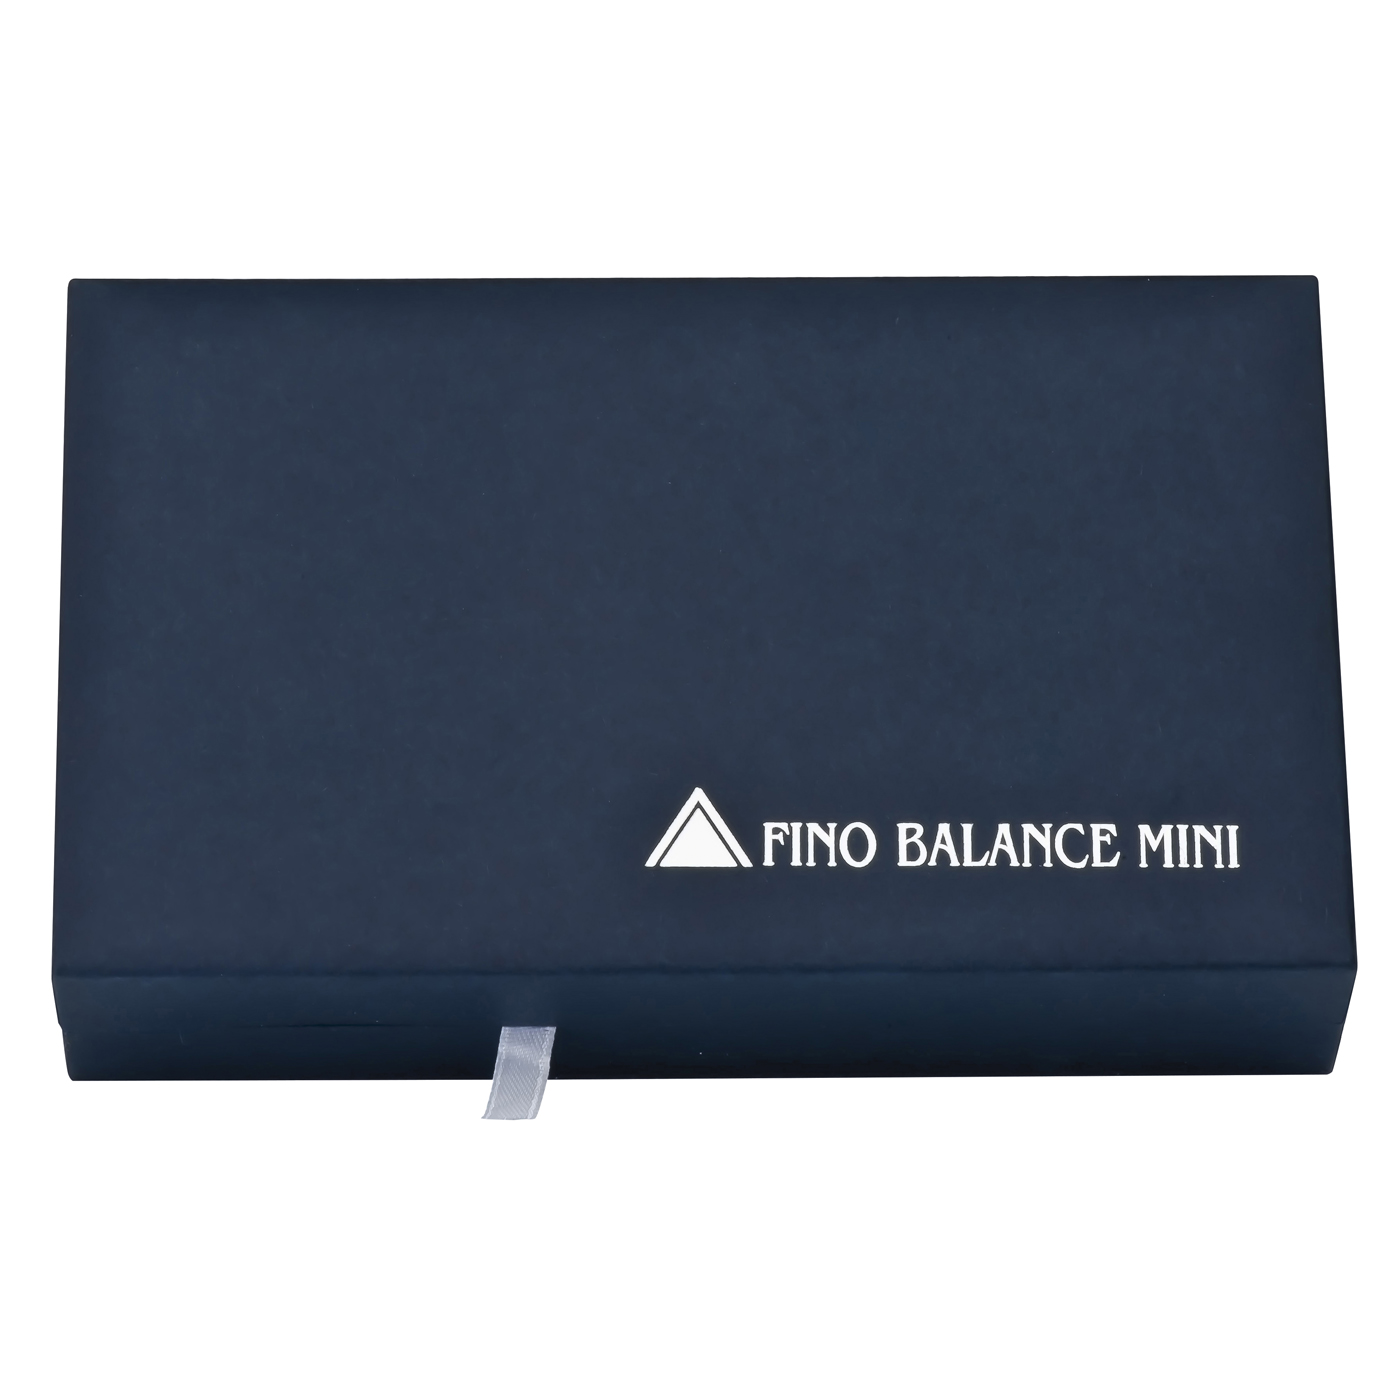 FINO BALANCE MINI Pocket Scales - 1 piece